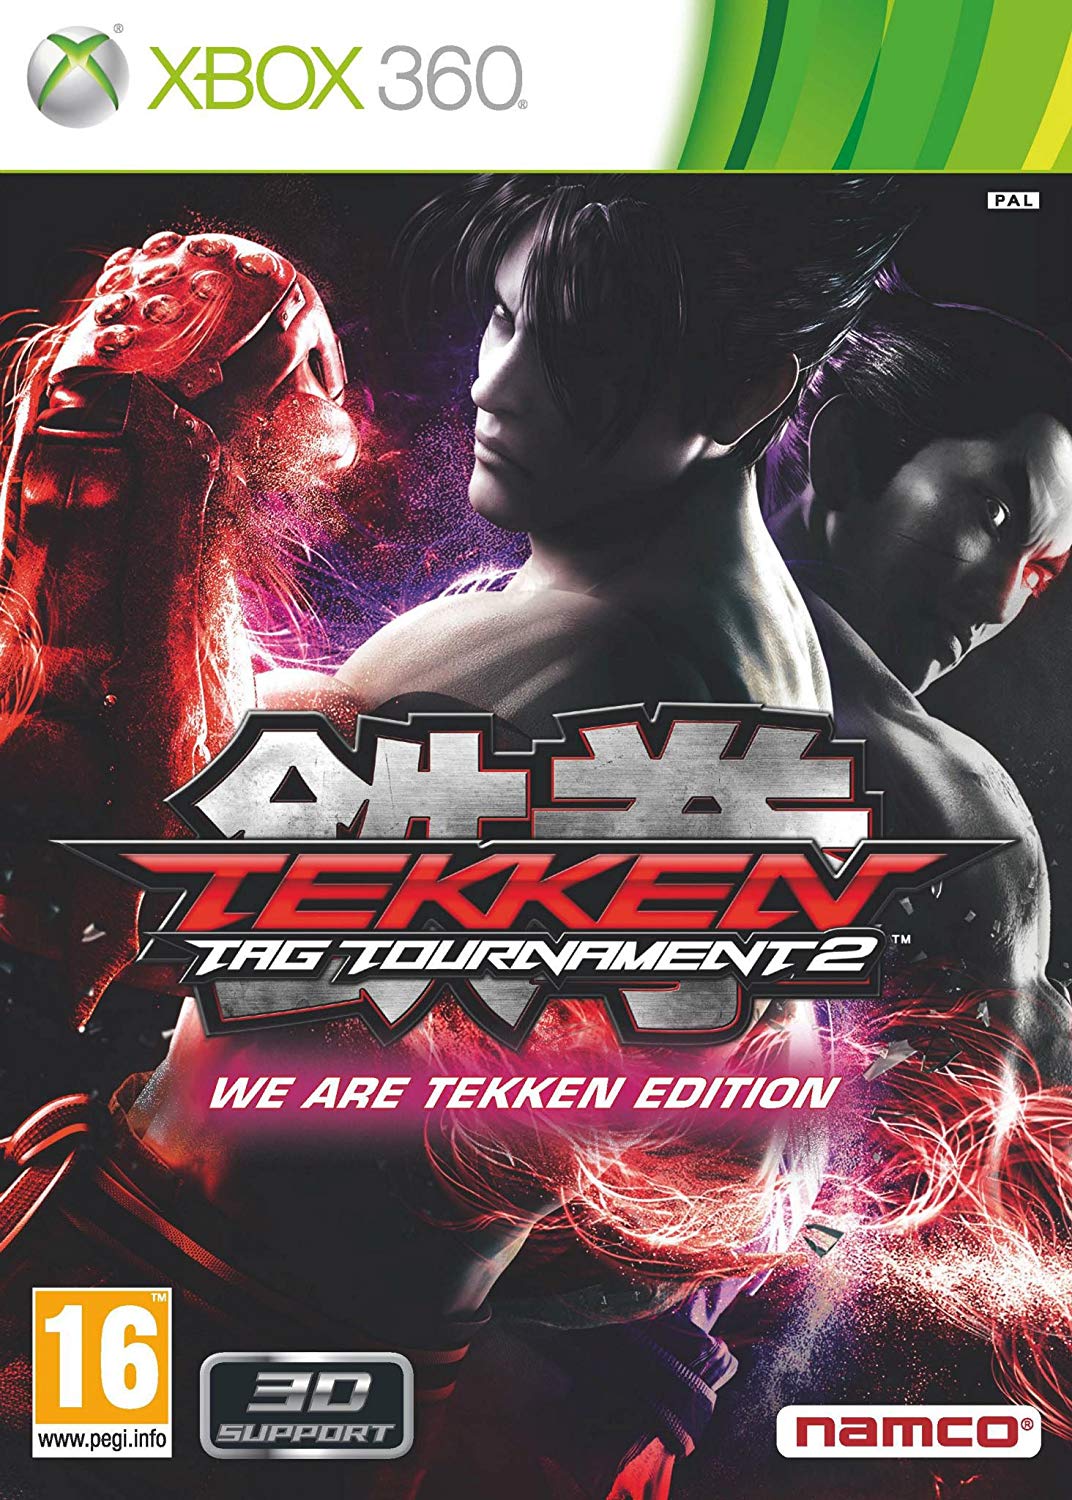 Tekken Tag Tournament 2: We are Tekken Edition